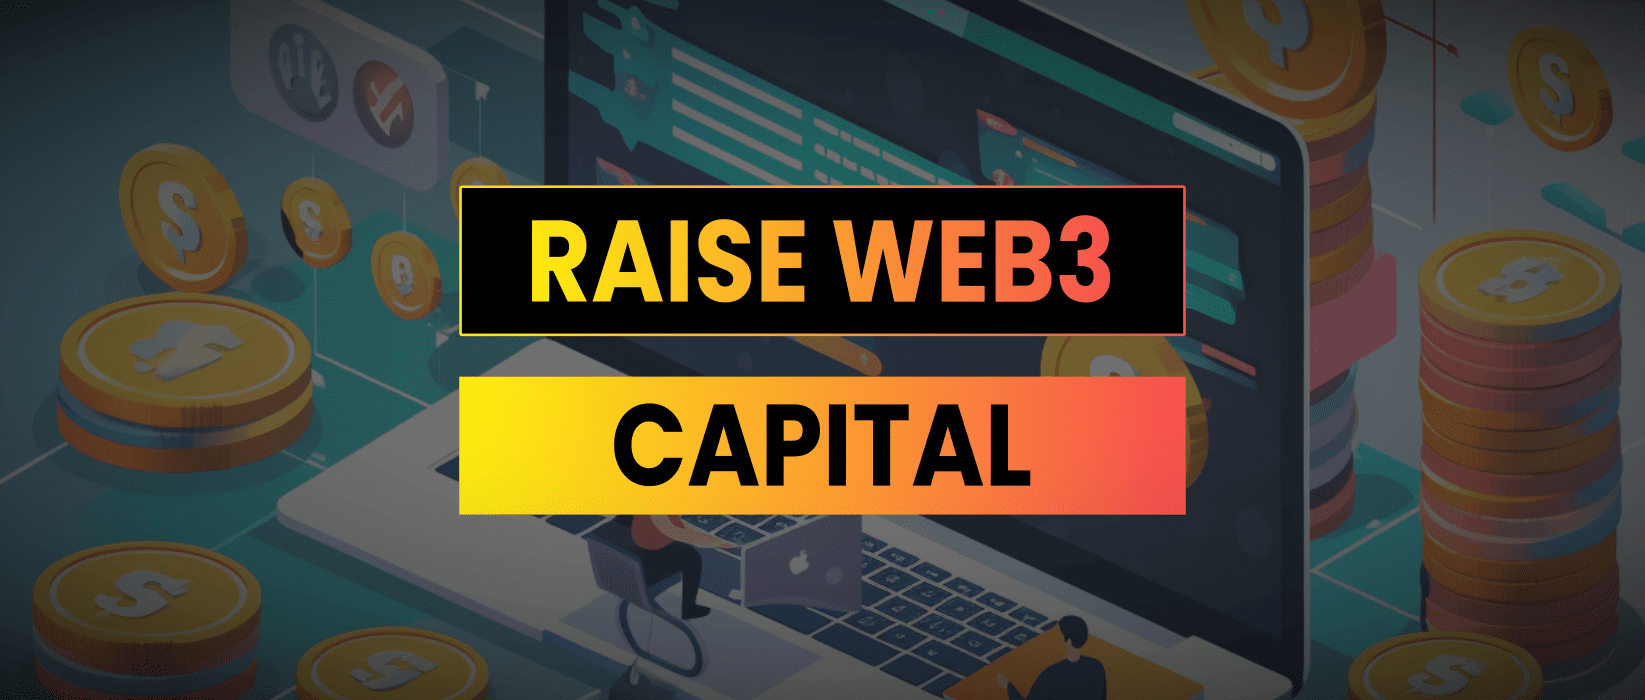 3 Ways To Raise Web3 Funding